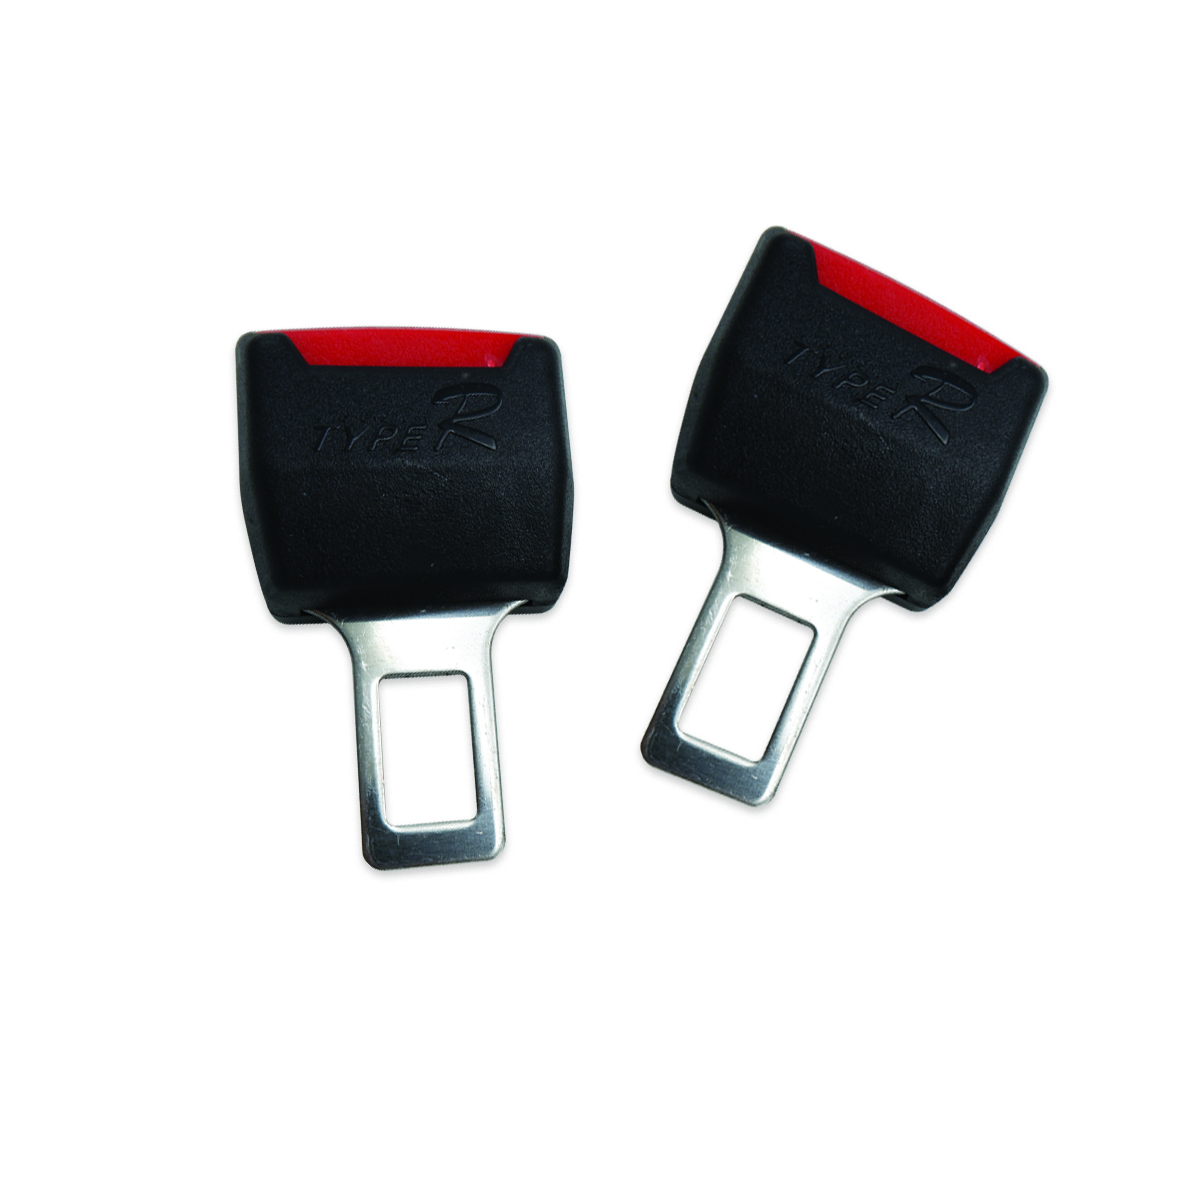 Pair Seat Belt Lock Black For Universal All 2000 - 2018 | eBay